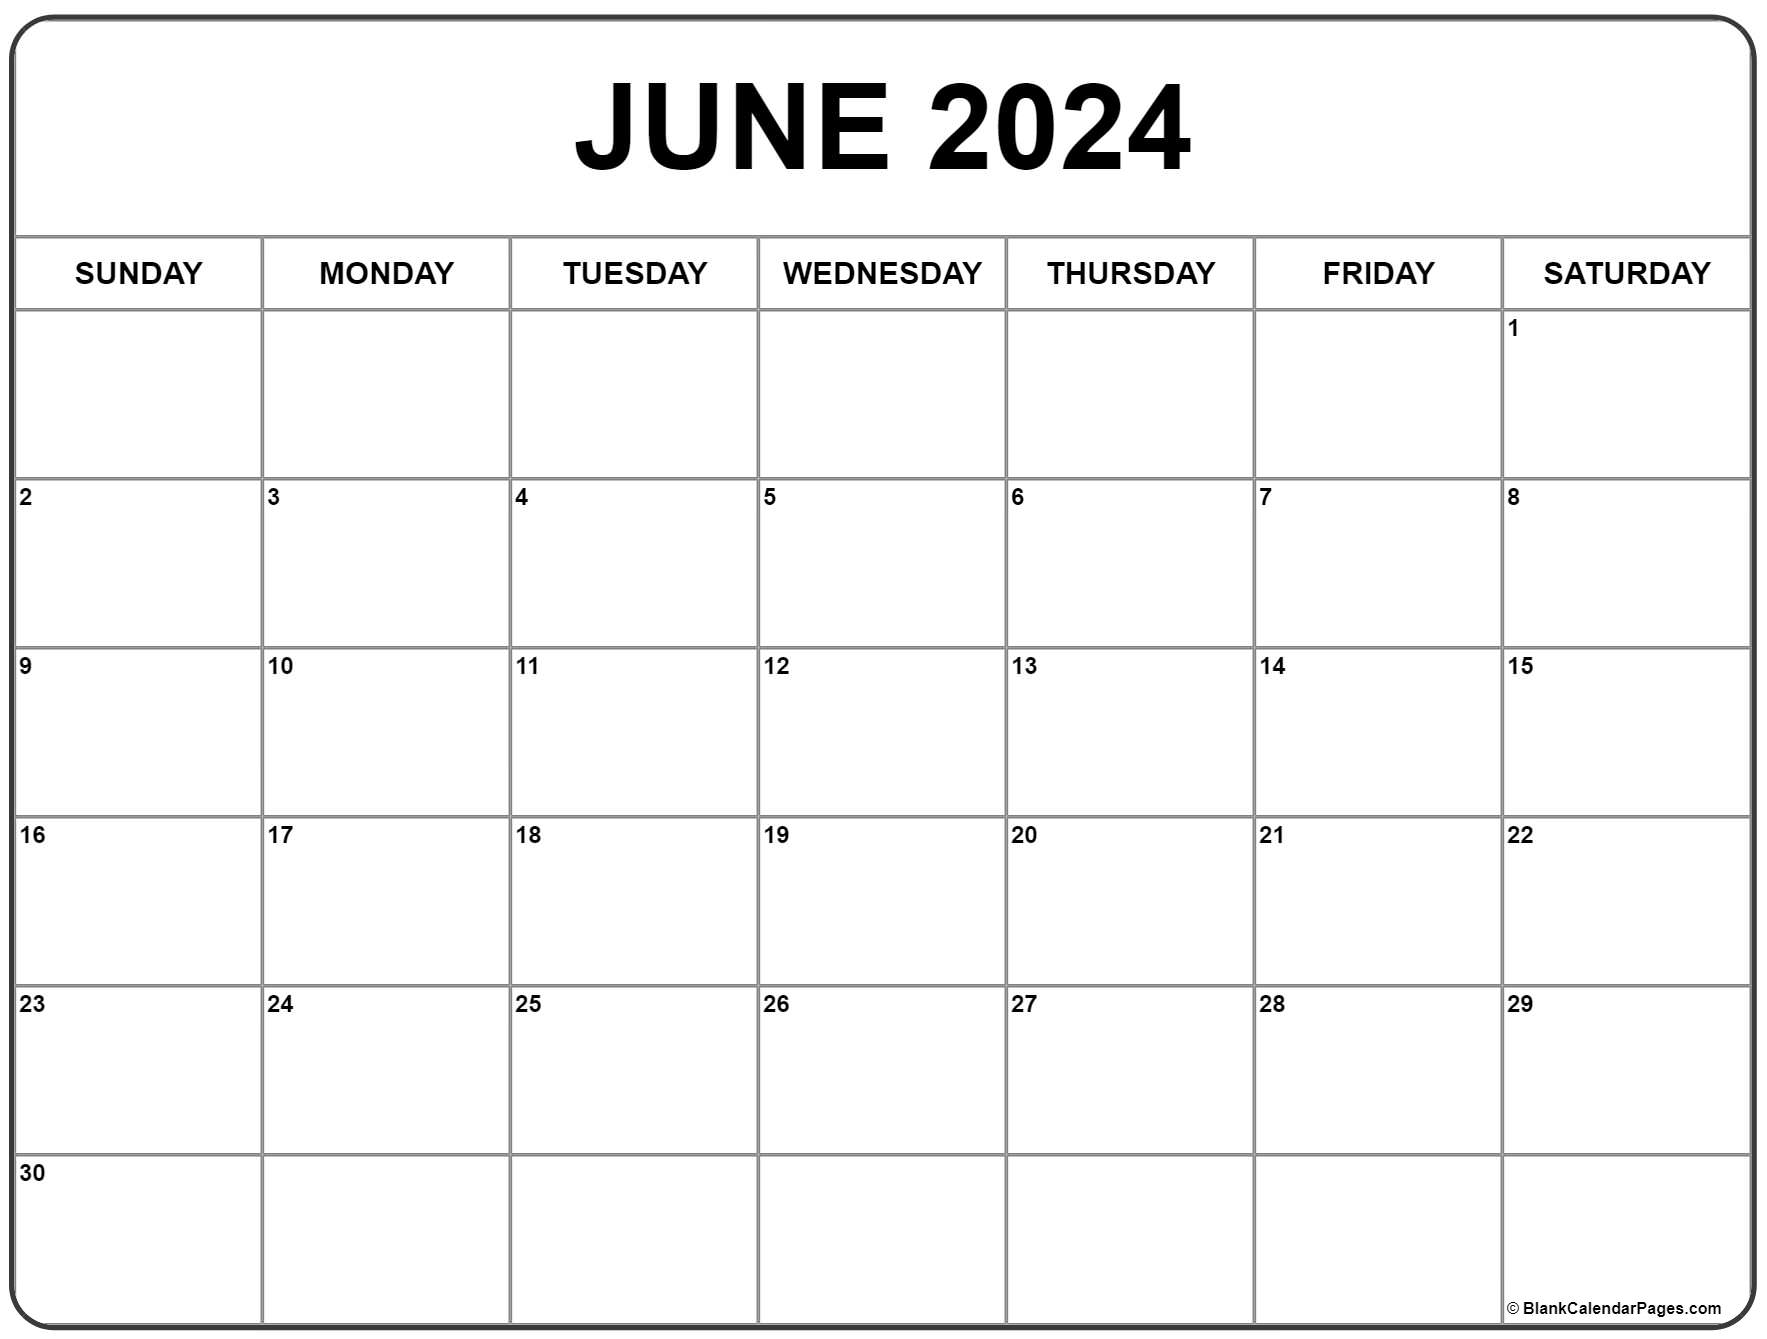 June 2024 Calendar | Free Printable Calendar for Free June Calendar 2024 Printable